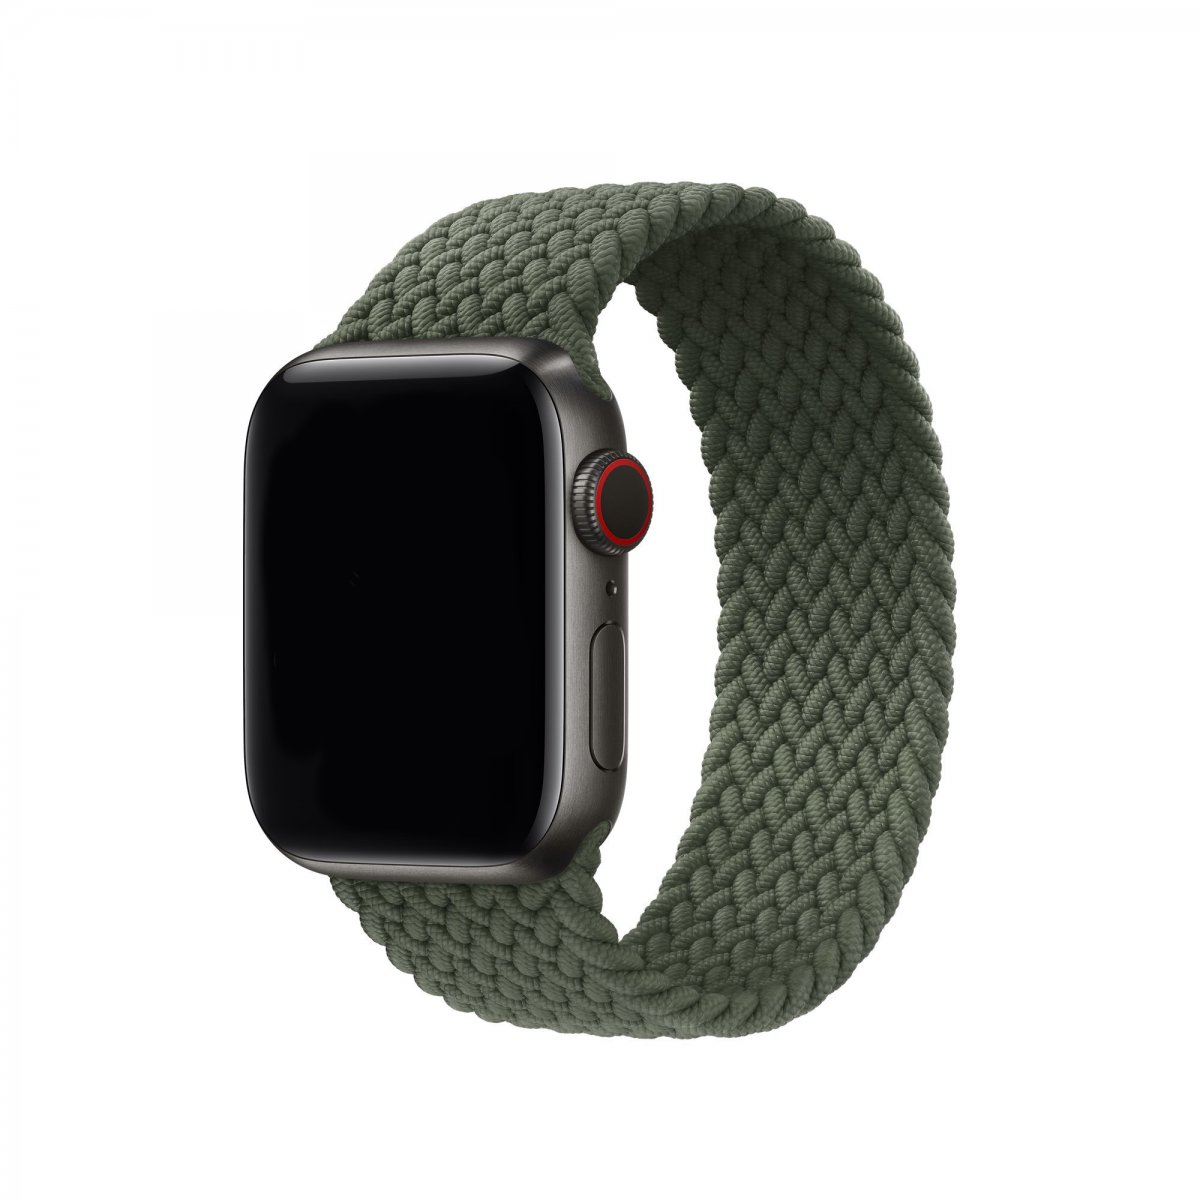 Řemínek iMore Braided Solo Loop Apple Watch Series 1/2/3 38mm - tmavě zelený (M)